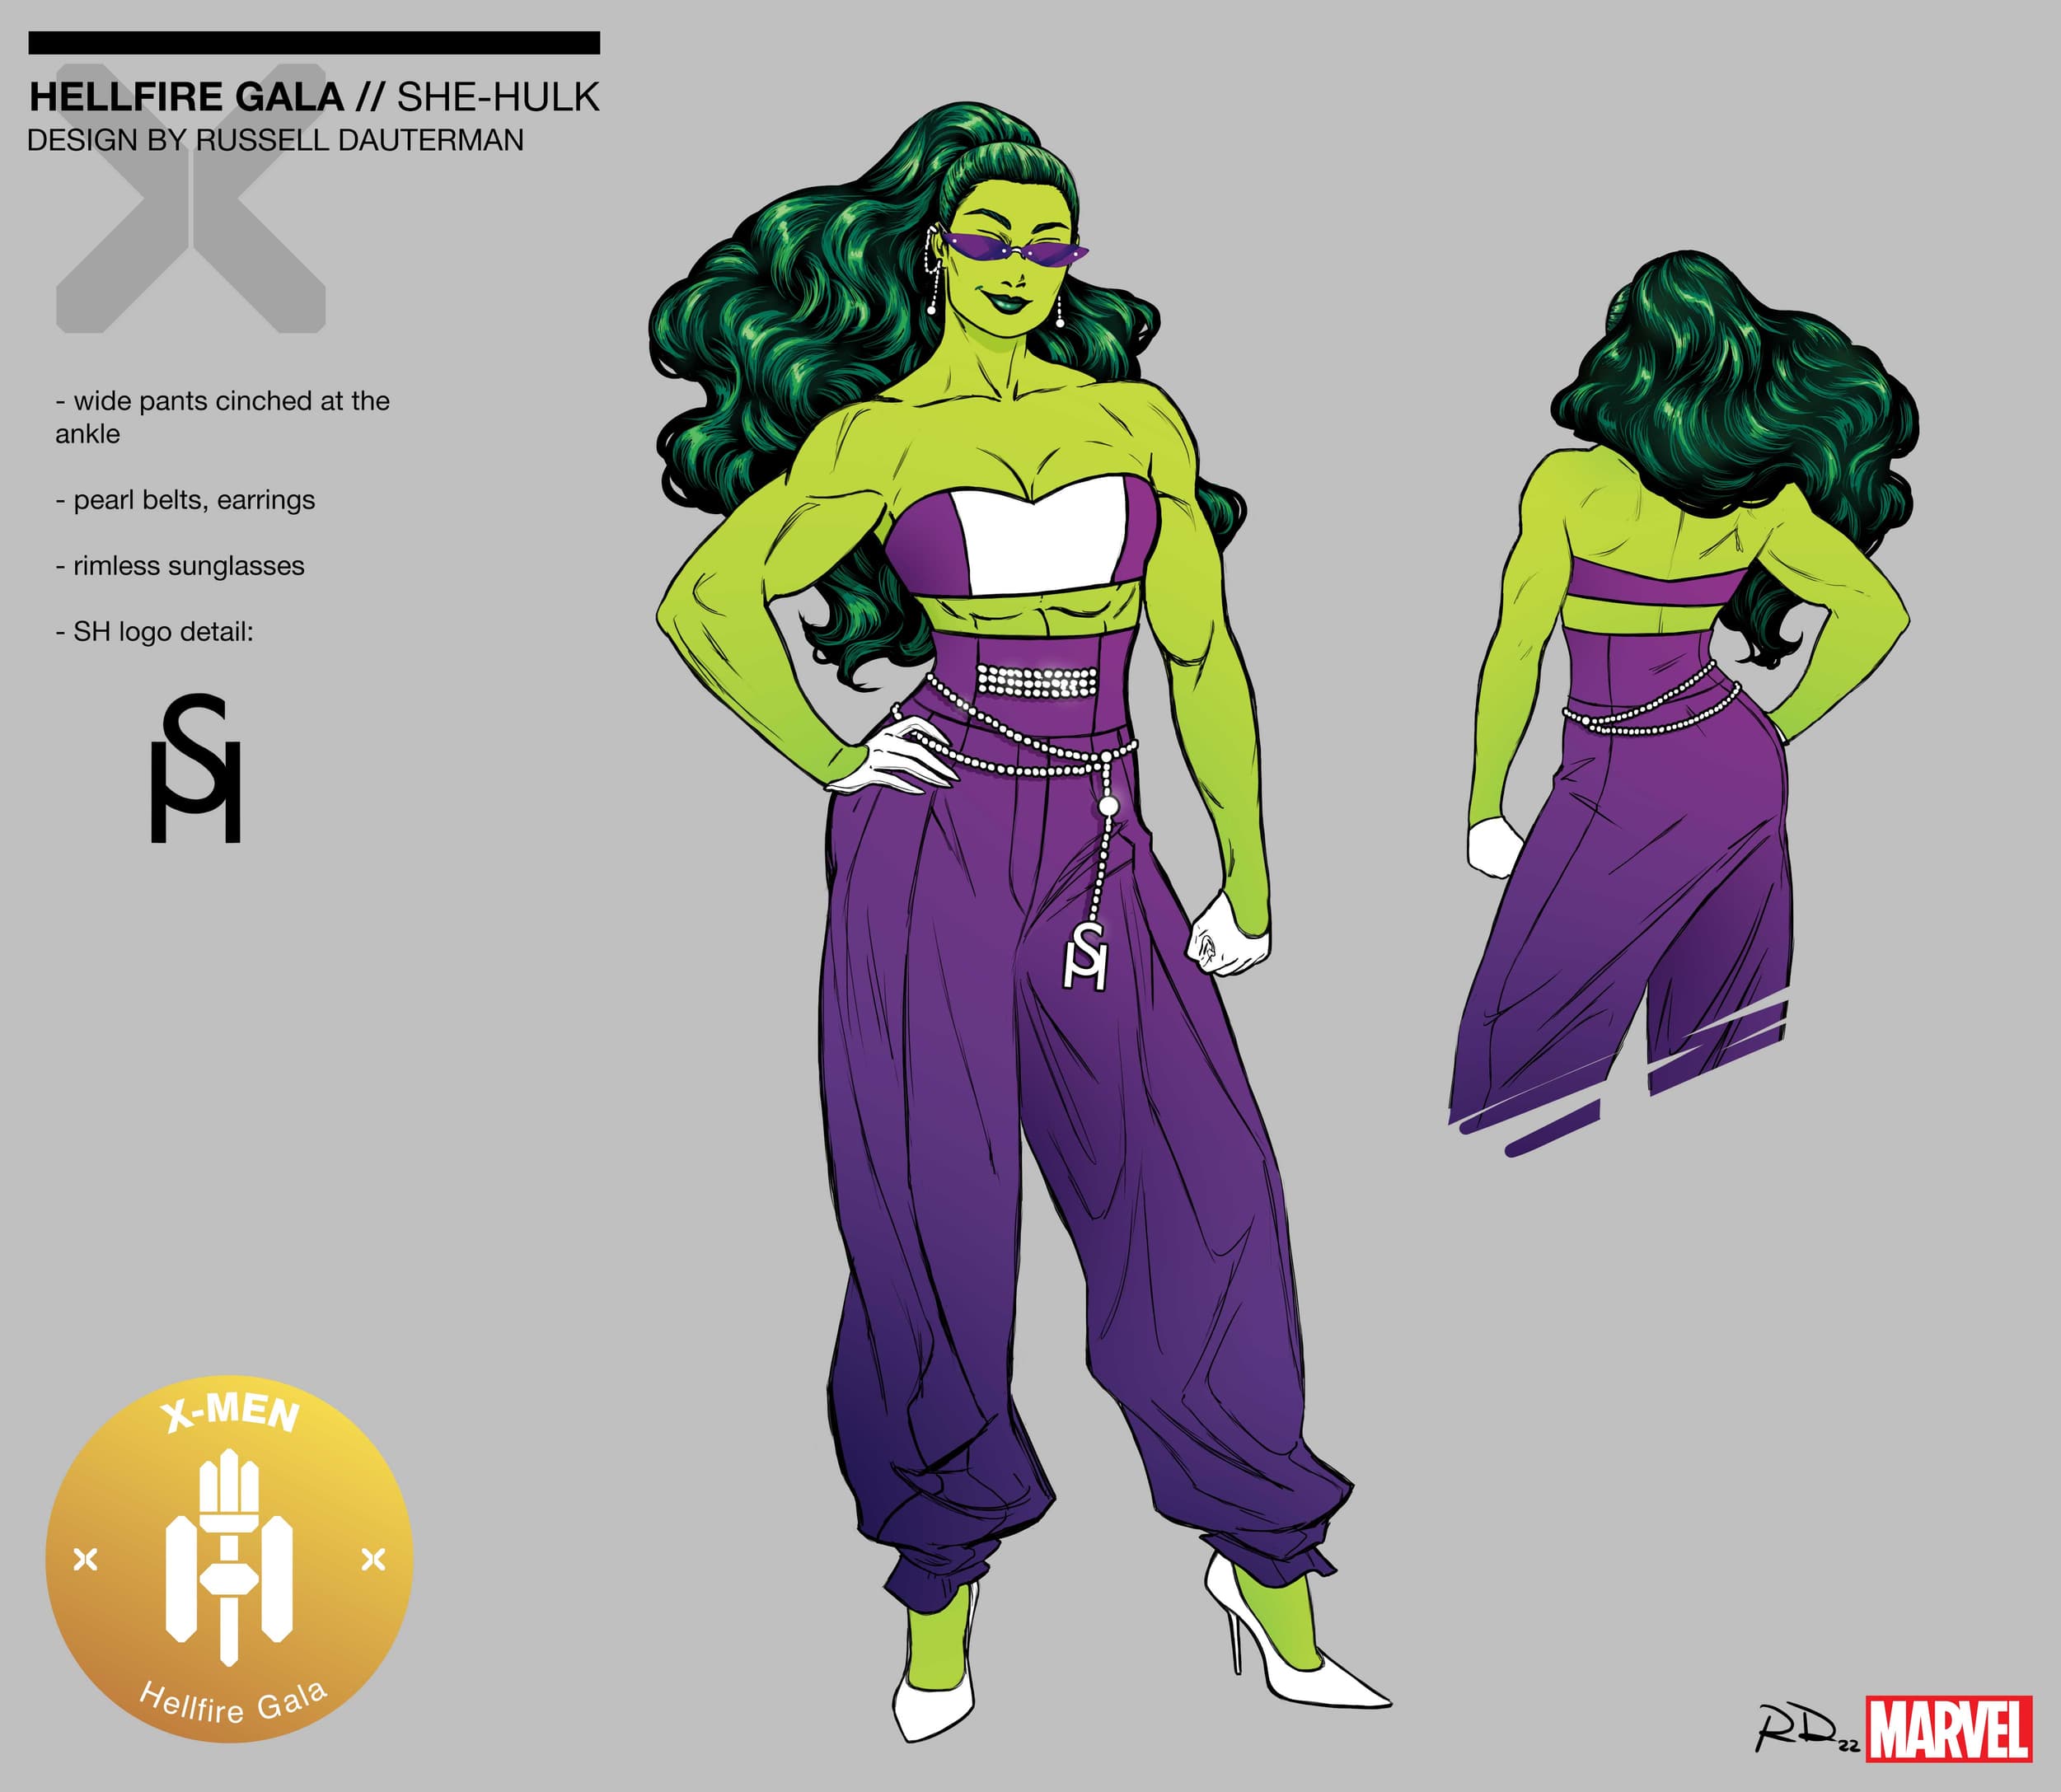 She-Hulk Hellfire Gala 2022 Design by Russell Dauterman